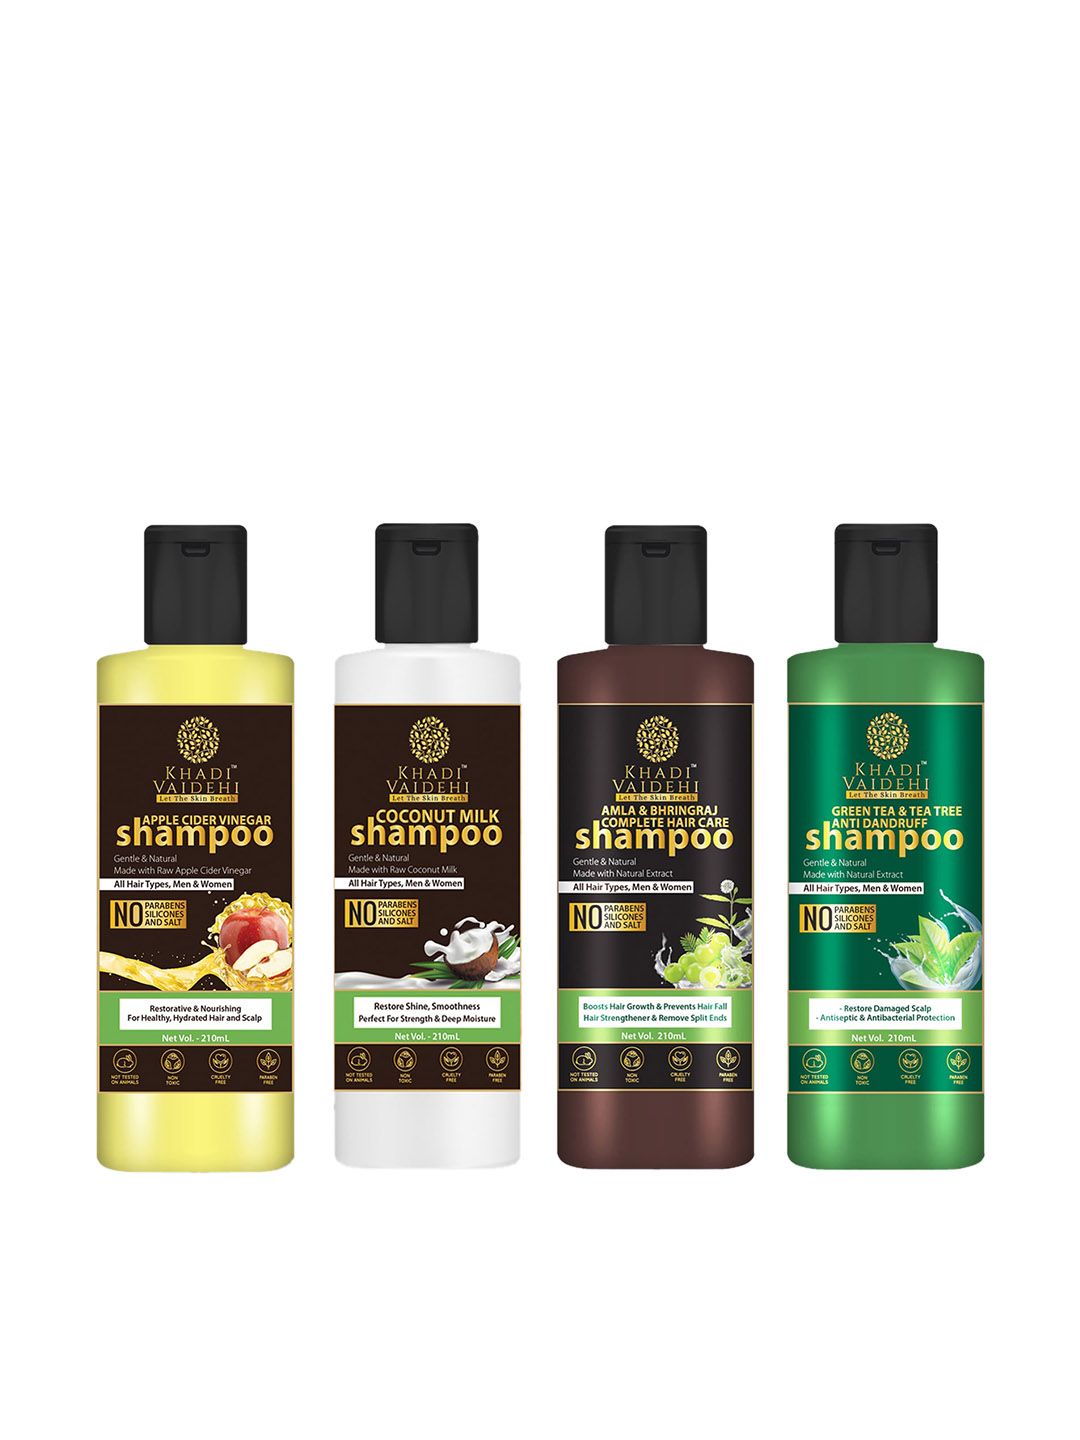 Khadi Vaidehi Set of 4 Paraben-Free Shampoos for All Hair Types - 210ml each Price in India